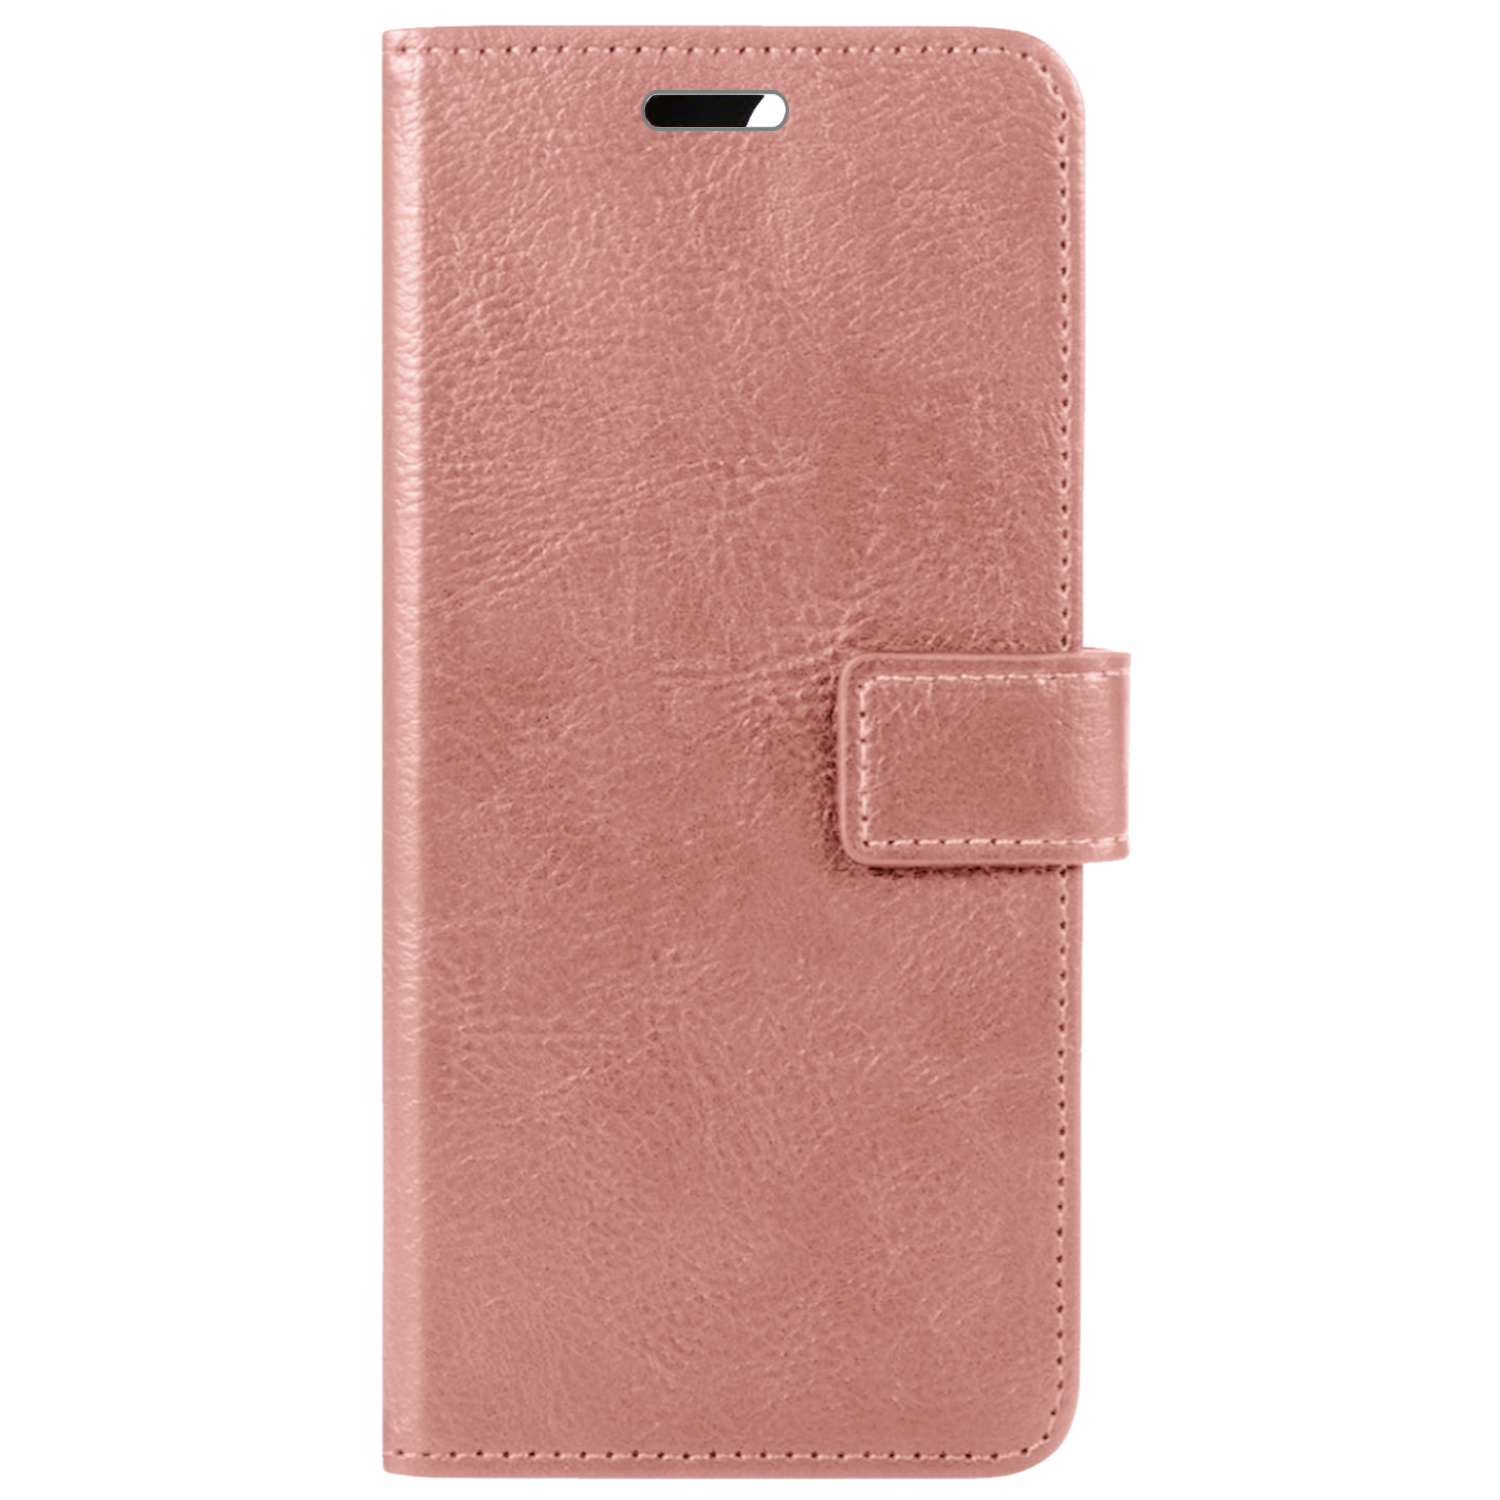 BASEY. OnePlus 10 Pro Hoesje Bookcase - OnePlus 10 Pro Hoes Flip Case Book Cover - OnePlus 10 Pro Hoes Book Case Rose Goud